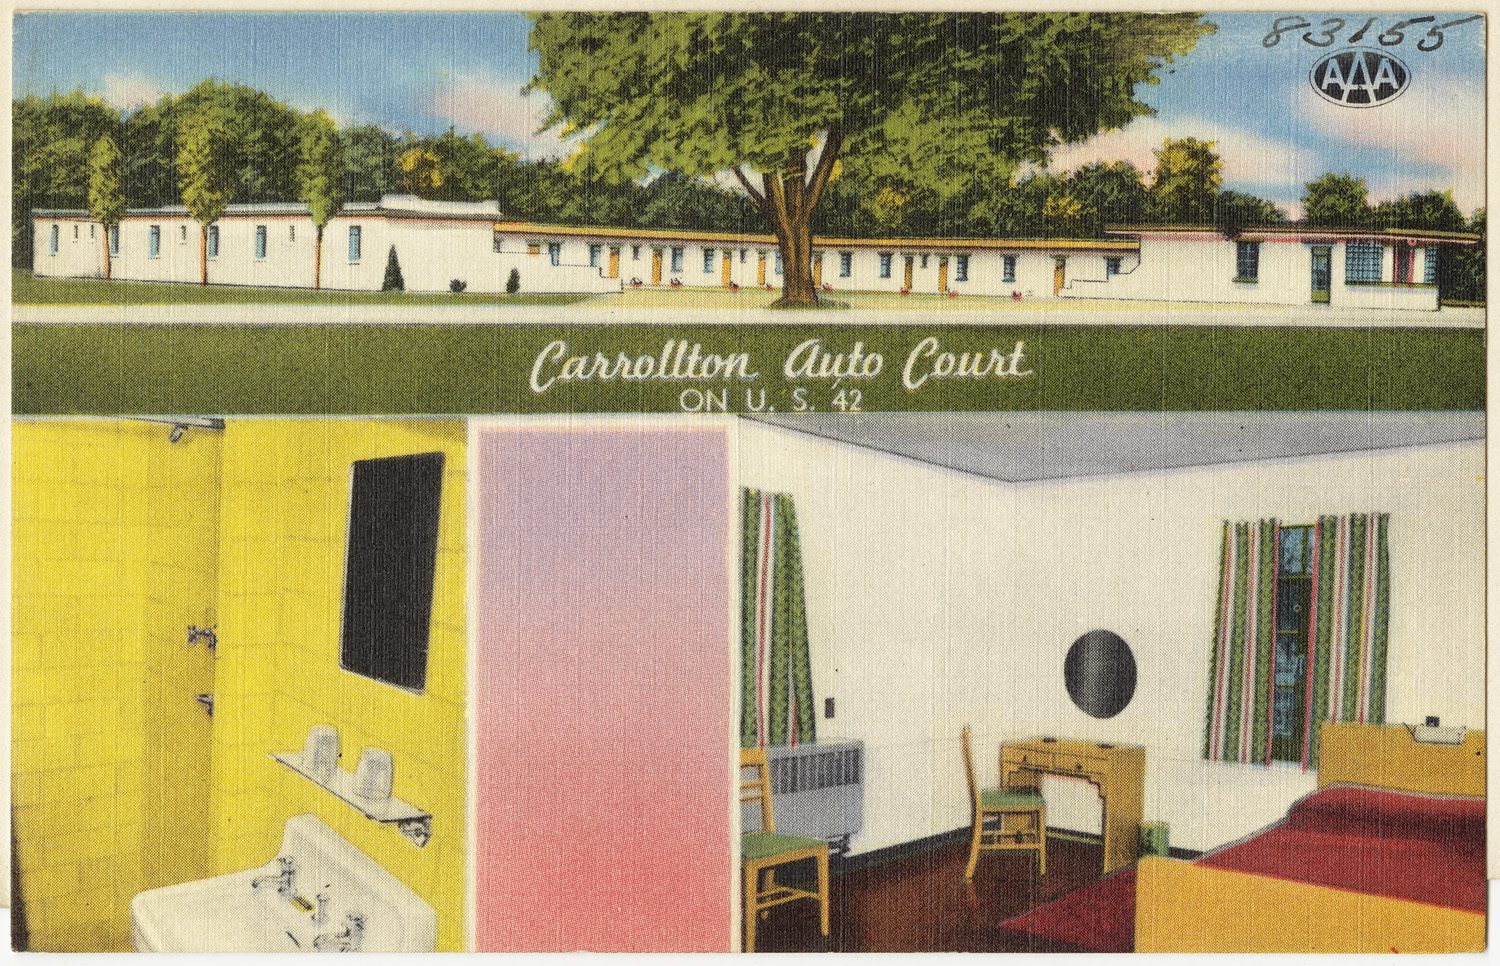 a color scheme depicting els and motels